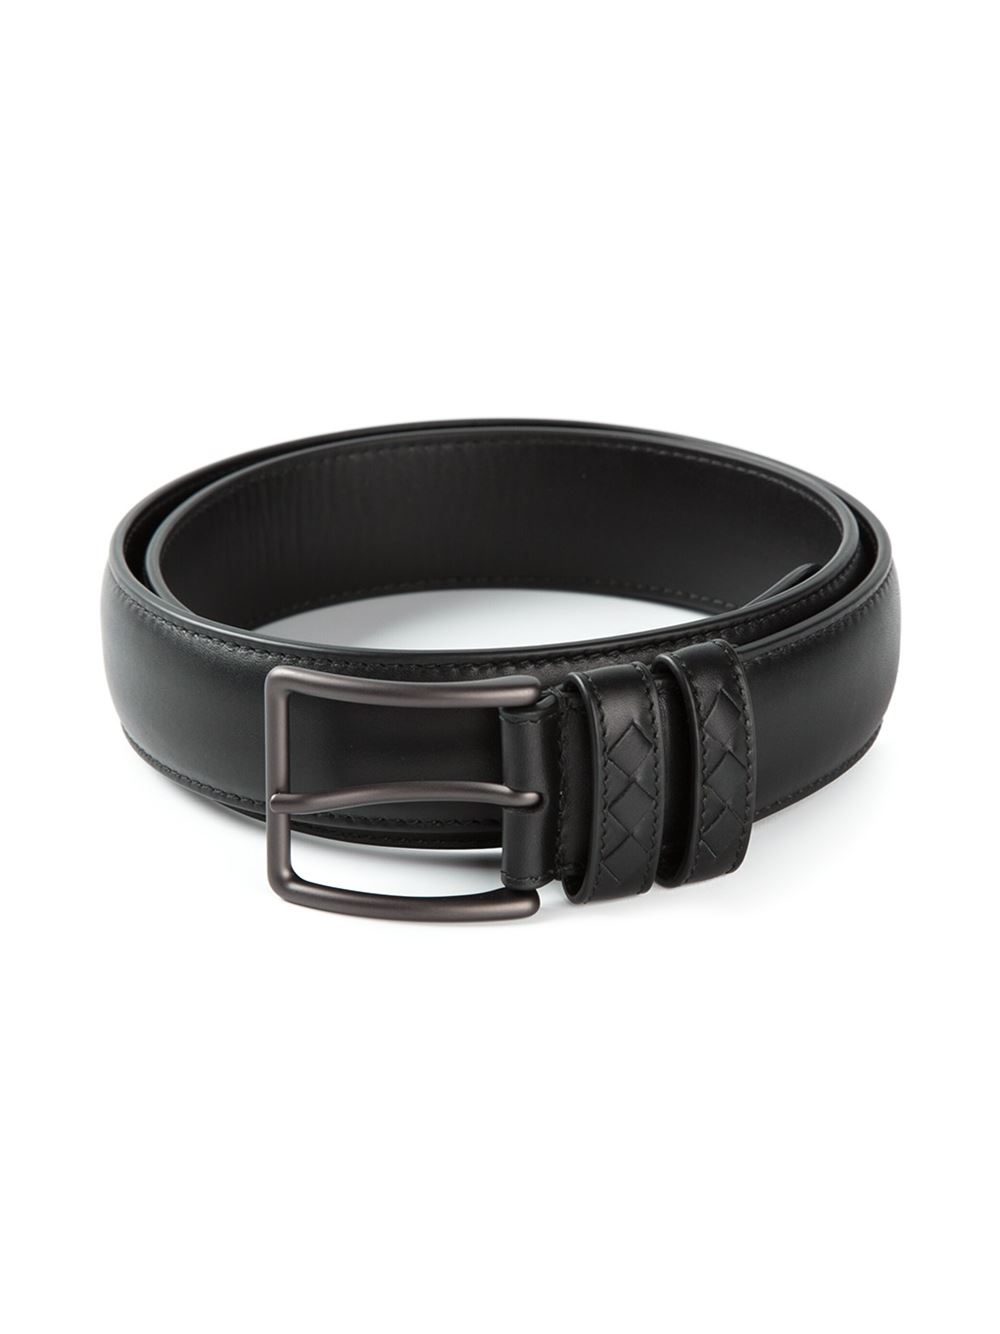 Lyst - Bottega Veneta Silver Buckle Belt in Black for Men